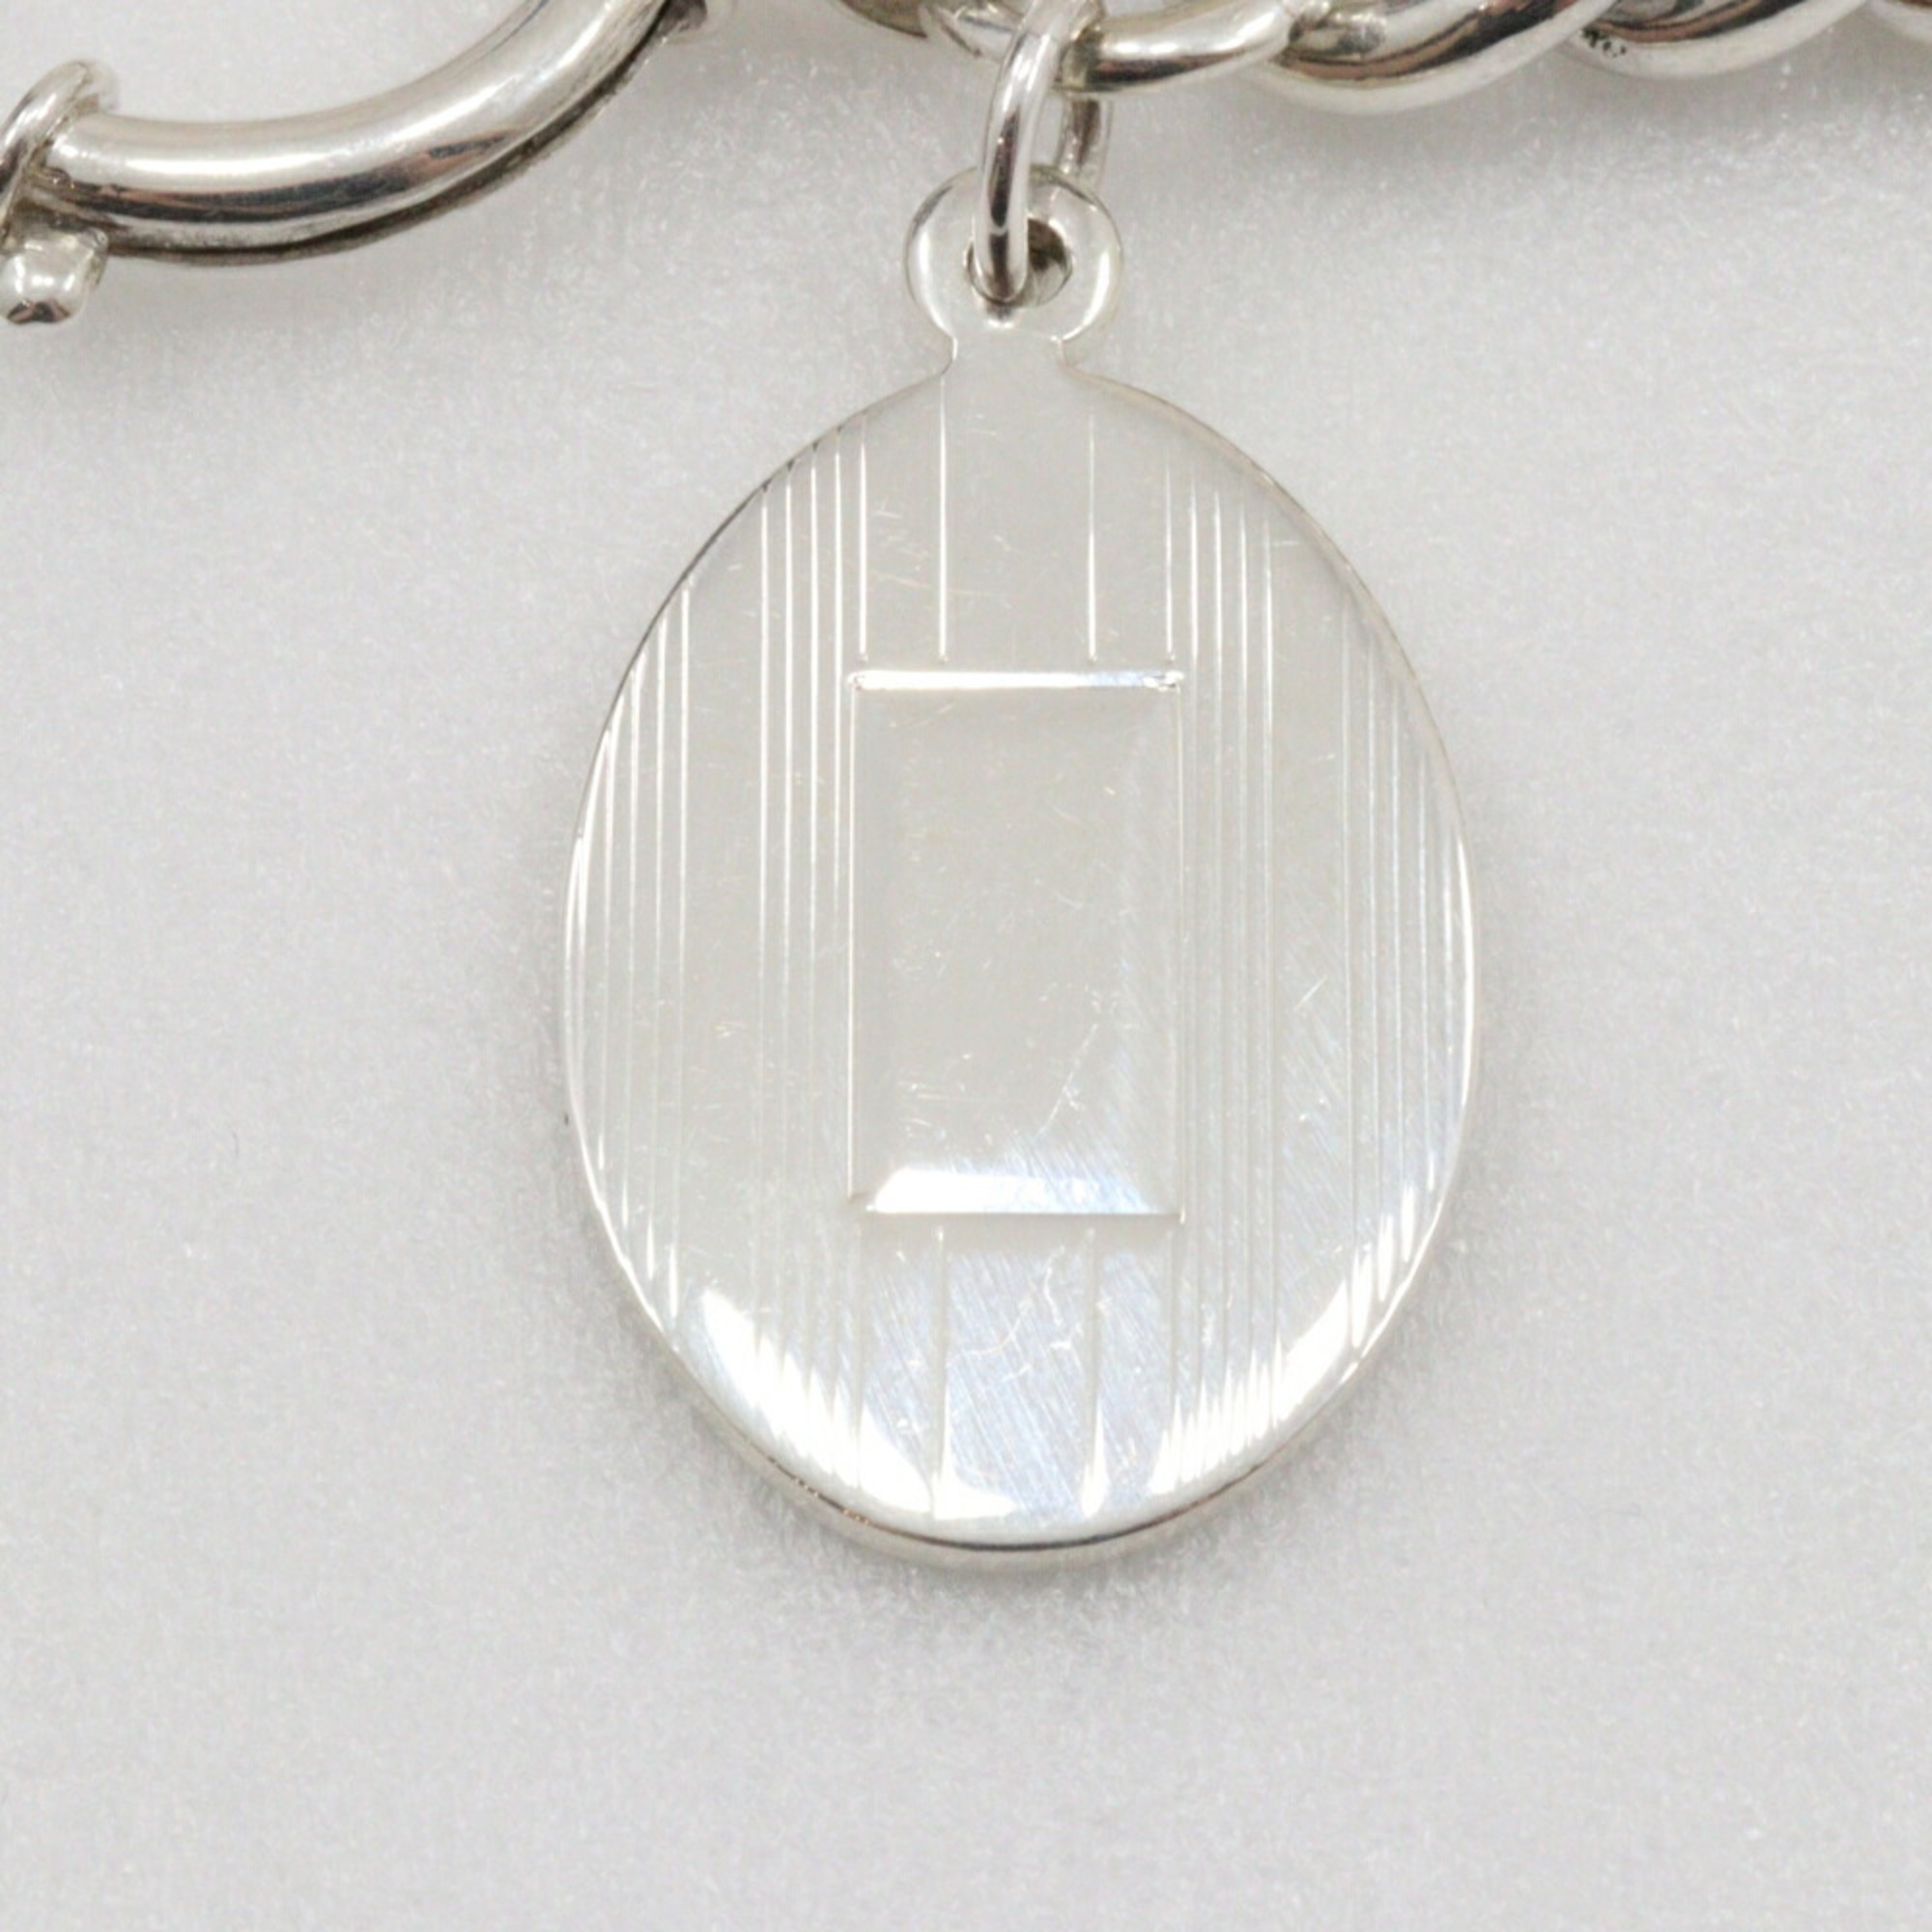 RALPH LAUREN Necklace, Silver 925, Approx. 84.5g, Unisex